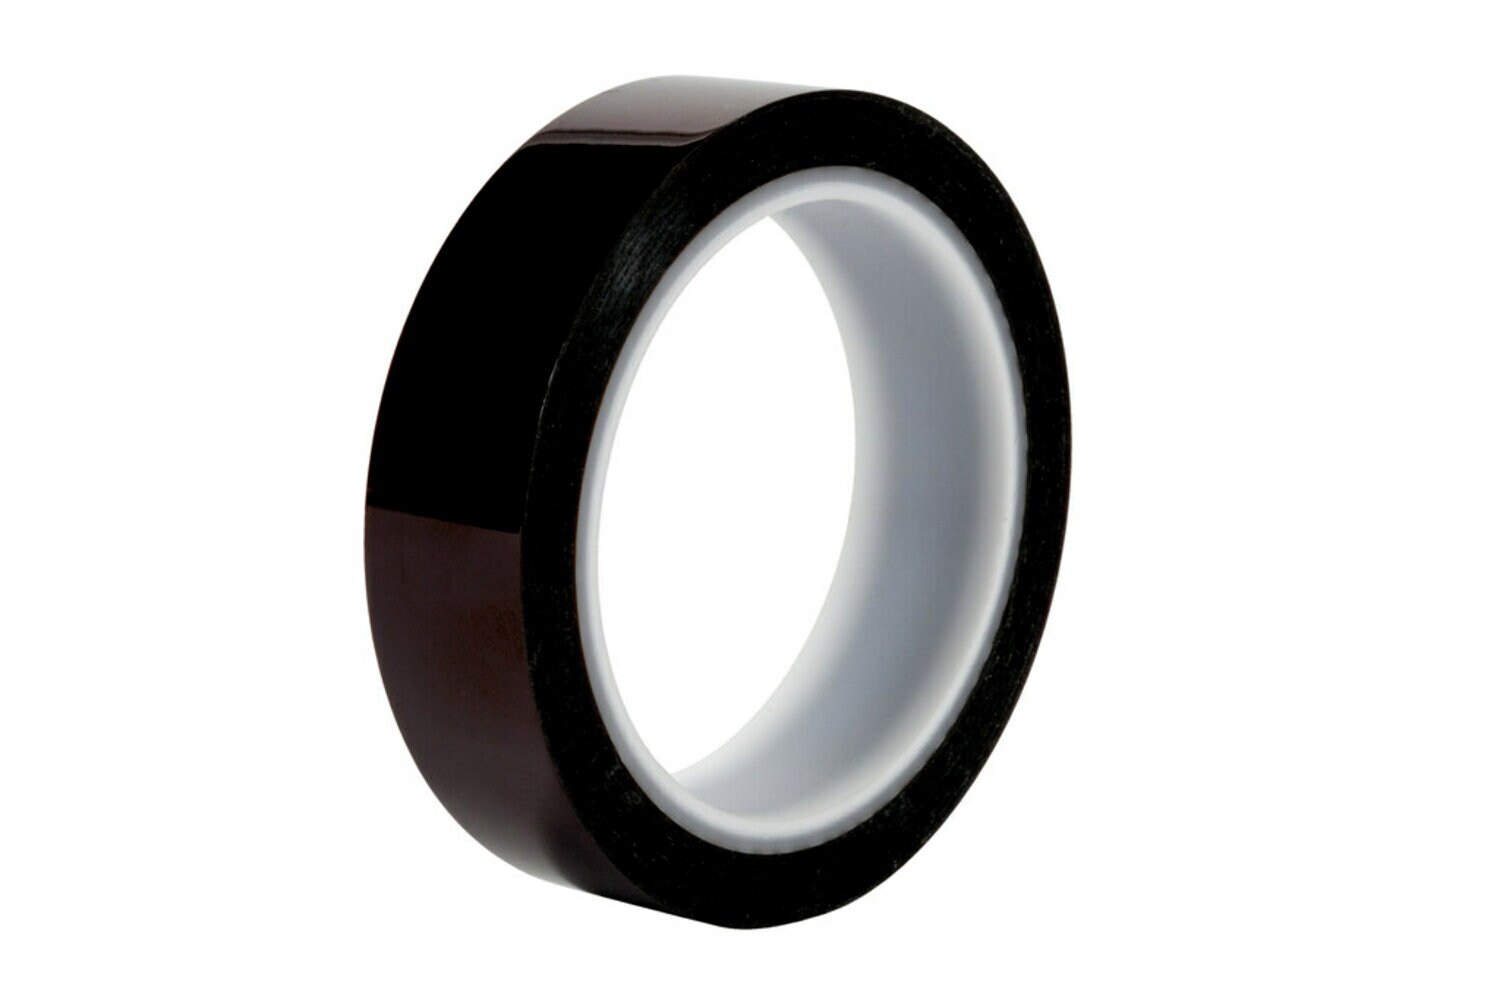 7100059611 - 3M Polyimide Tape 8998, Dark Amber, 1 1/2 in x 36 yd, 3.3 mil, 24 rolls
per case